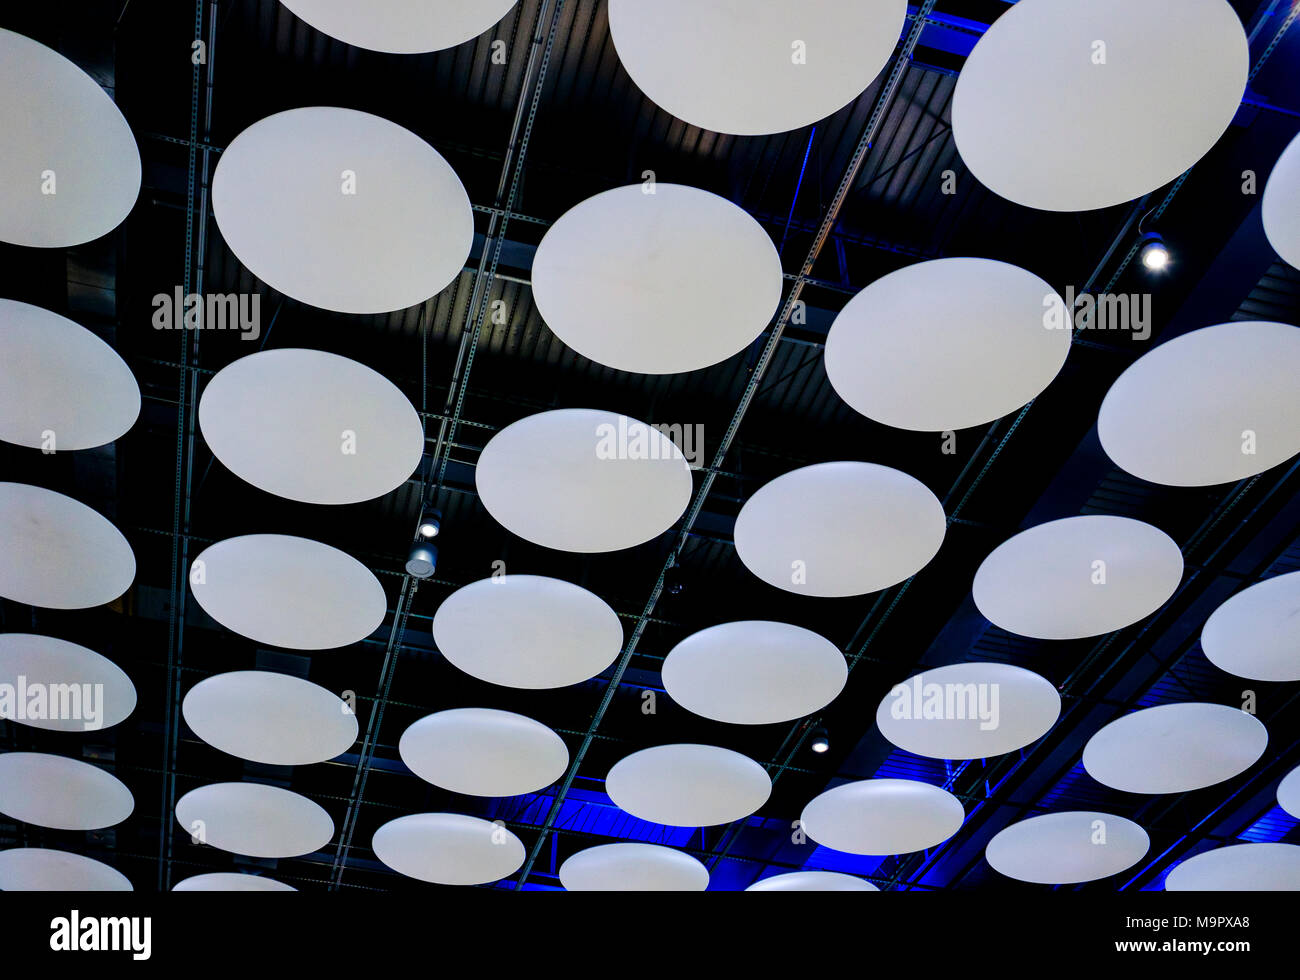 Plafond, l'aéroport de Heathrow, Londres, Angleterre, Grande-Bretagne Banque D'Images